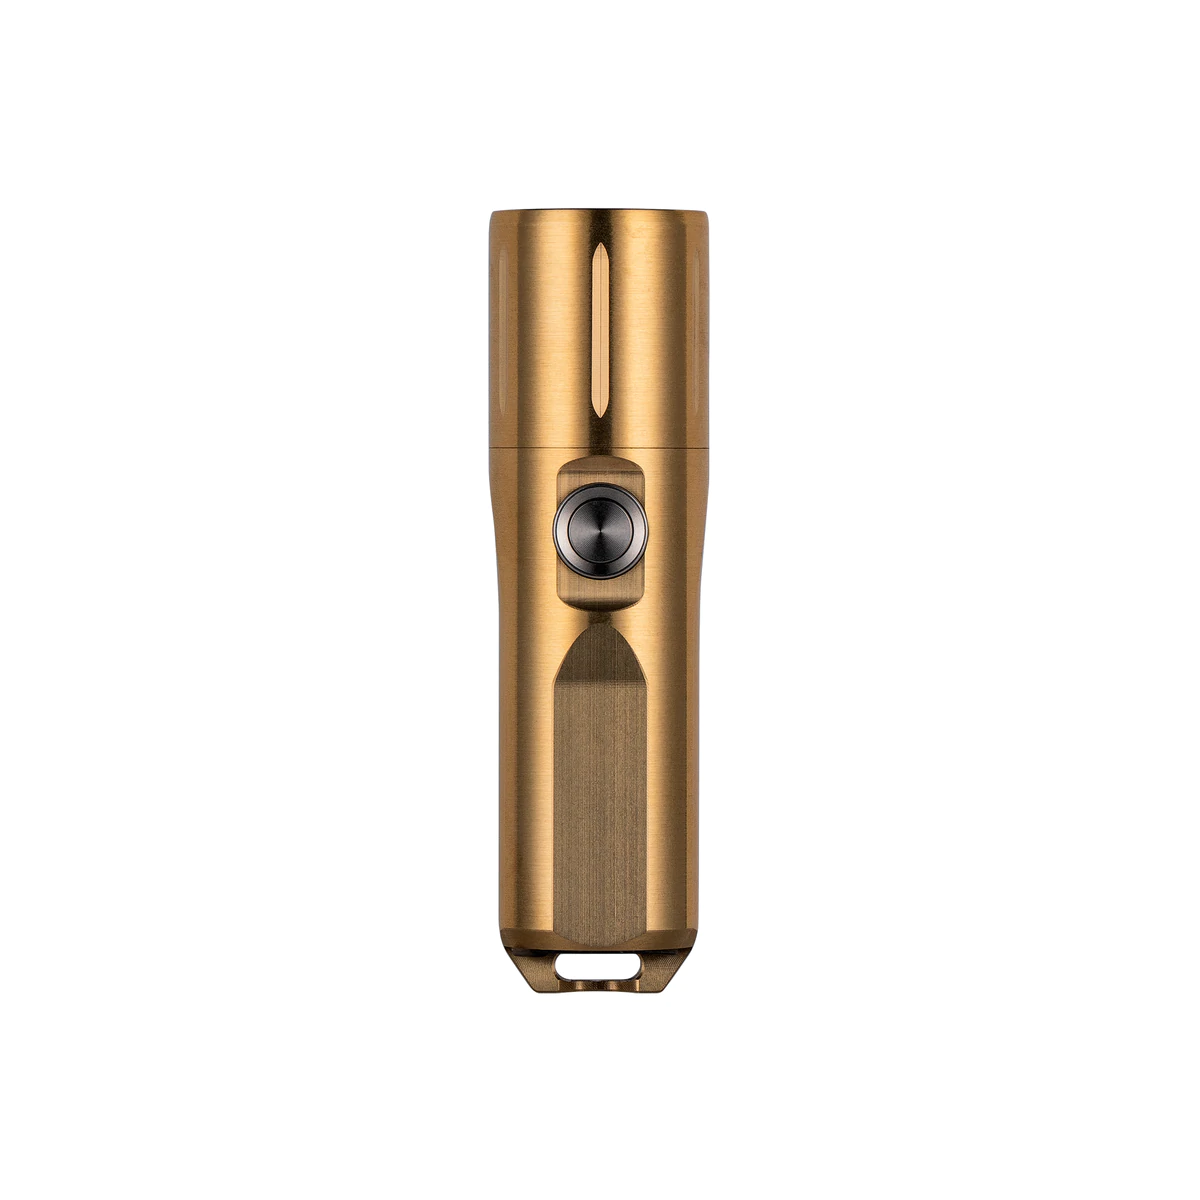 Rovyvon Aurora A29 Cu/Brass 700 Lumens Compact High-CRI EDC Flashlight